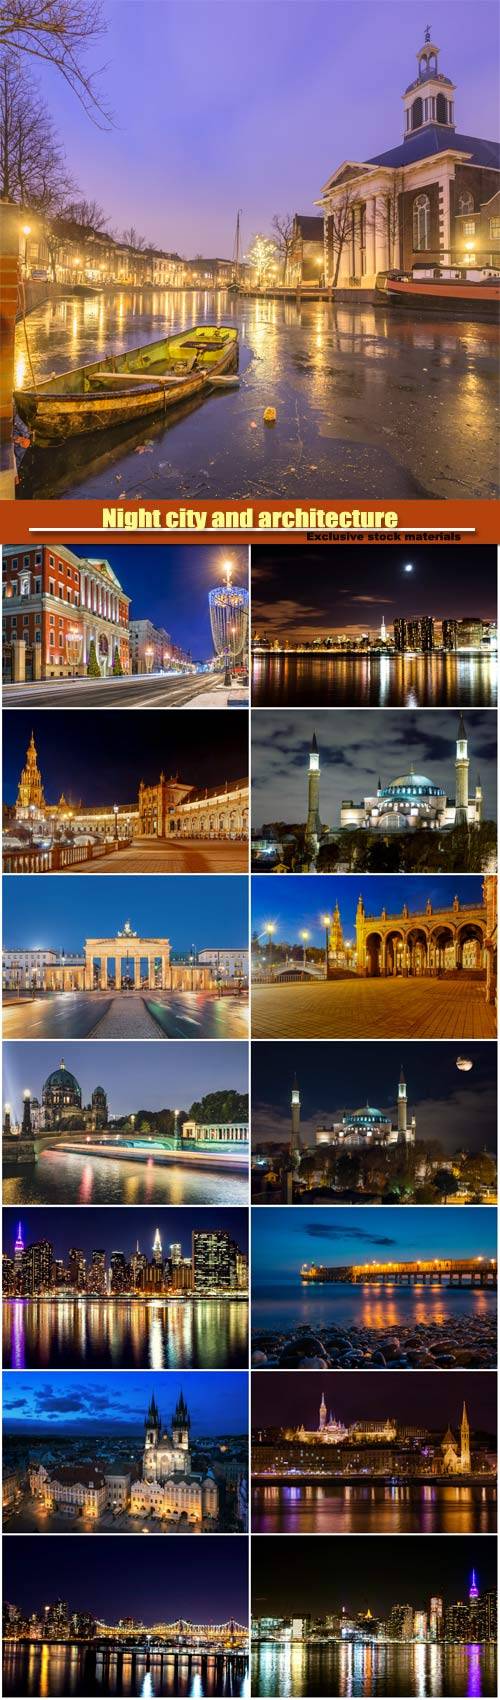 Night city and architecture around the world